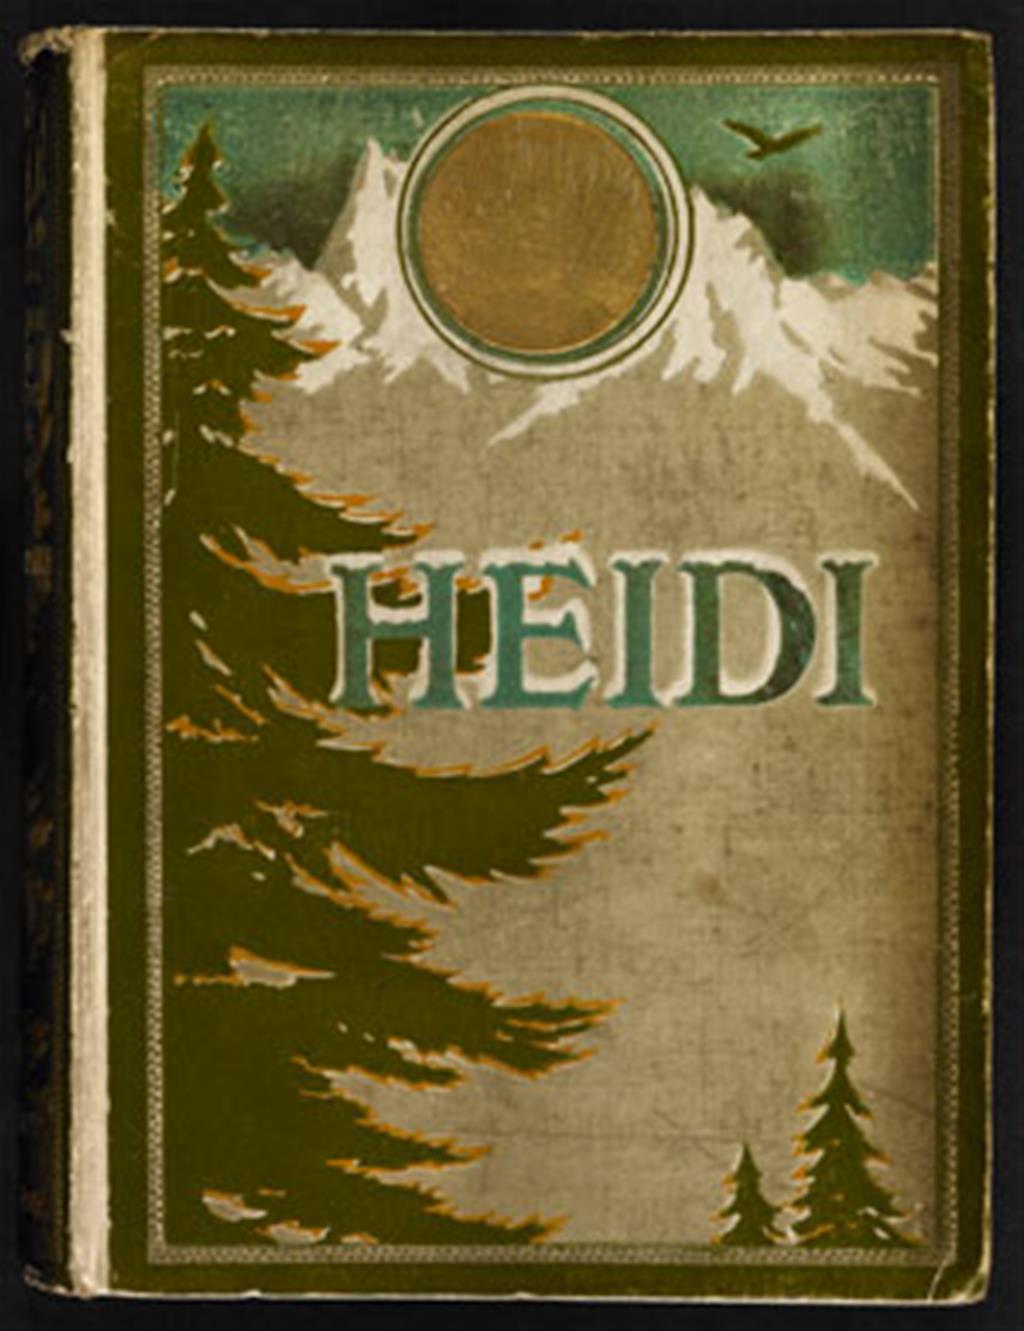 Heidi cover image